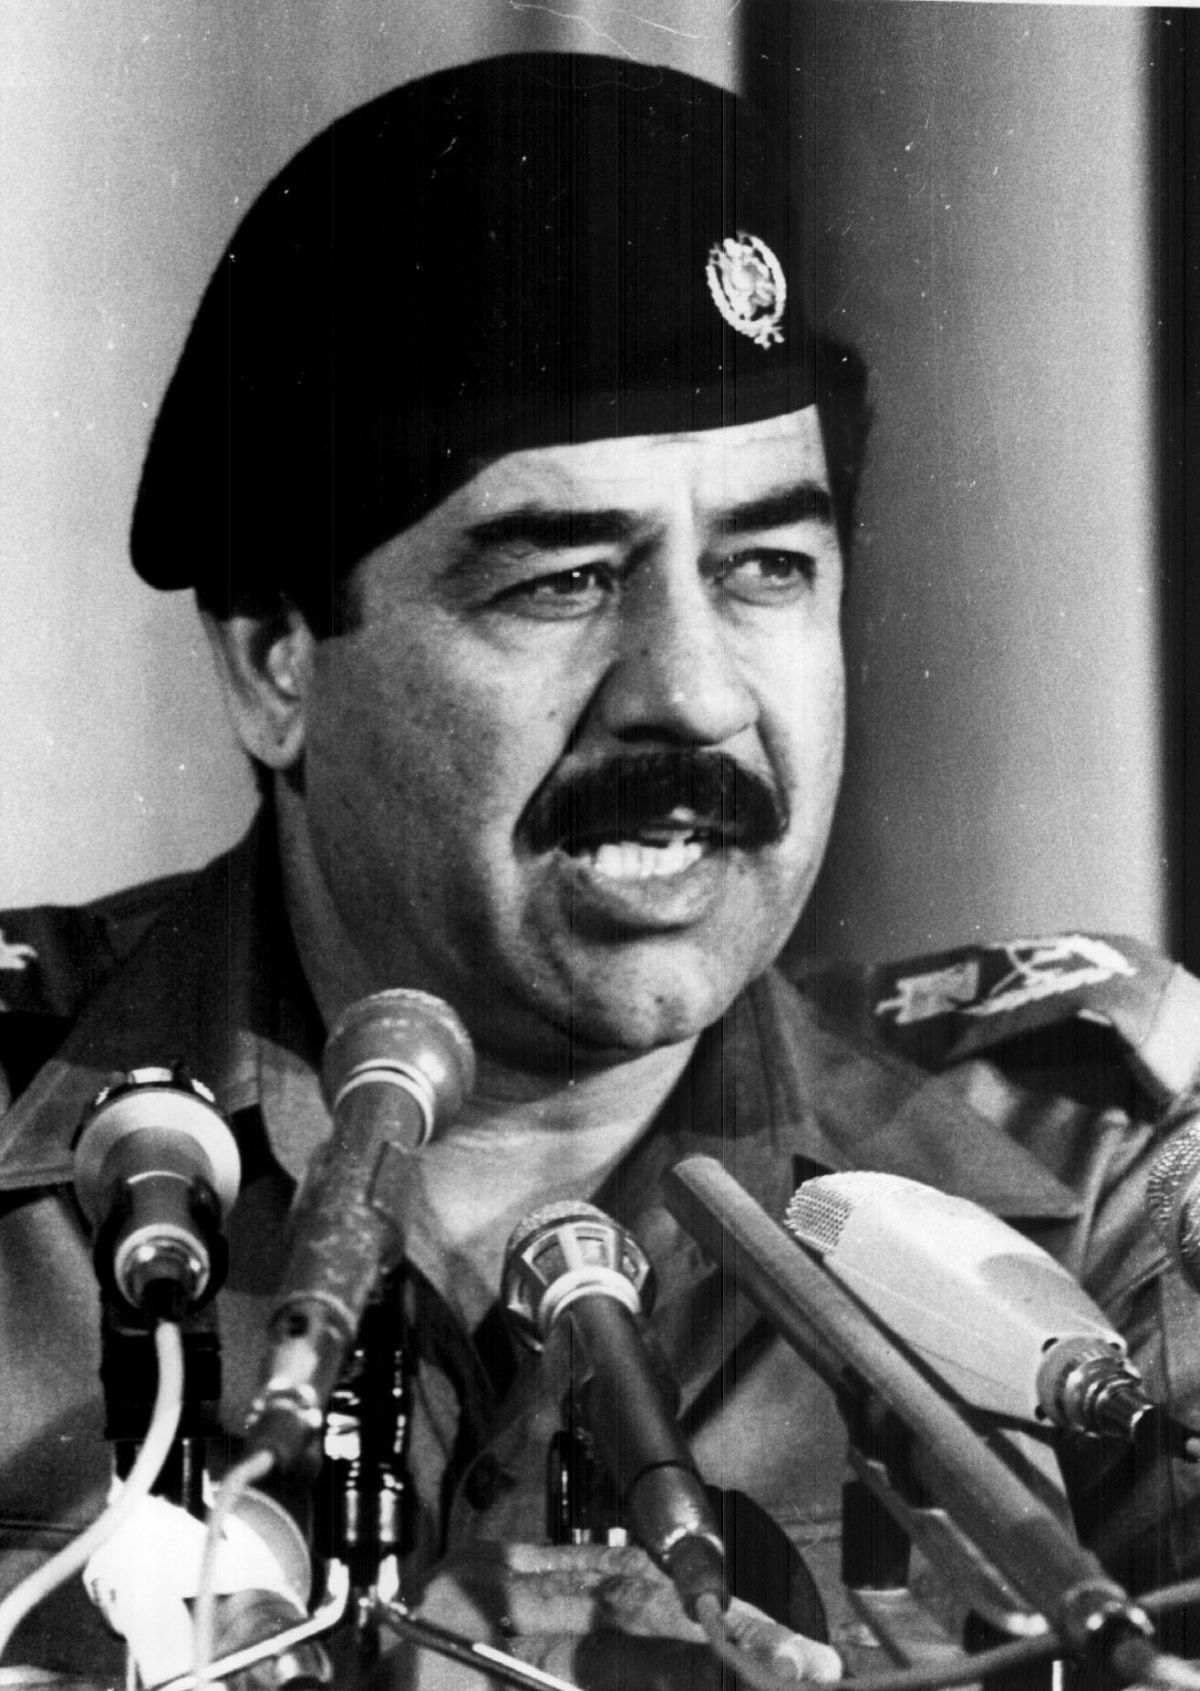 Hussein Saddam